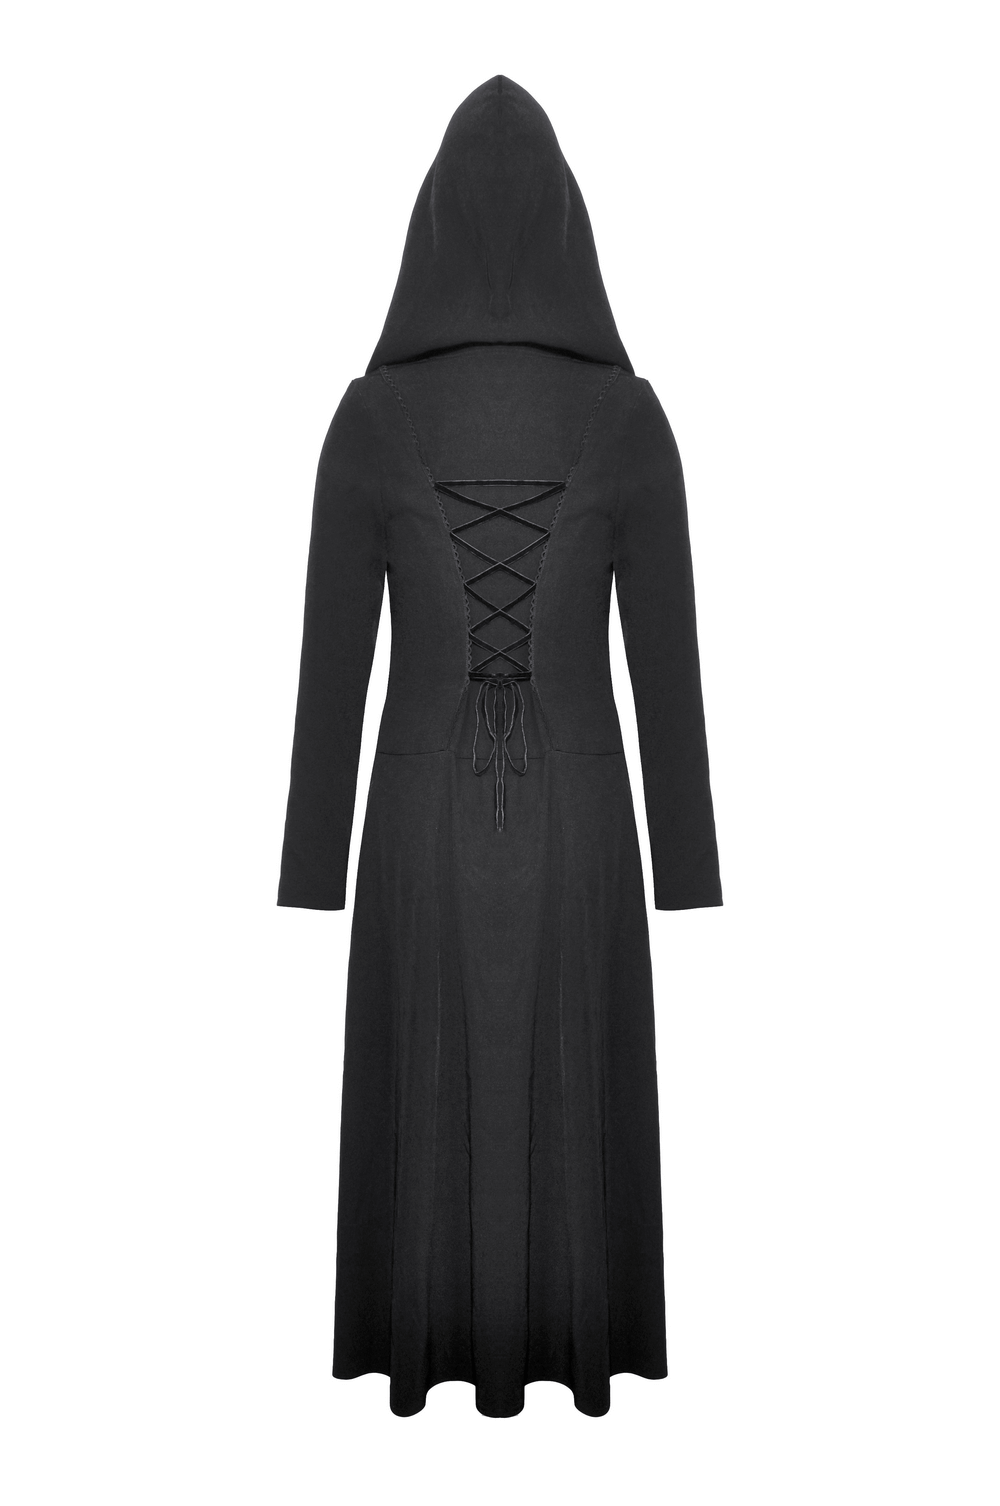 Elegant Gothic Hooded Coat with Lace Detailing